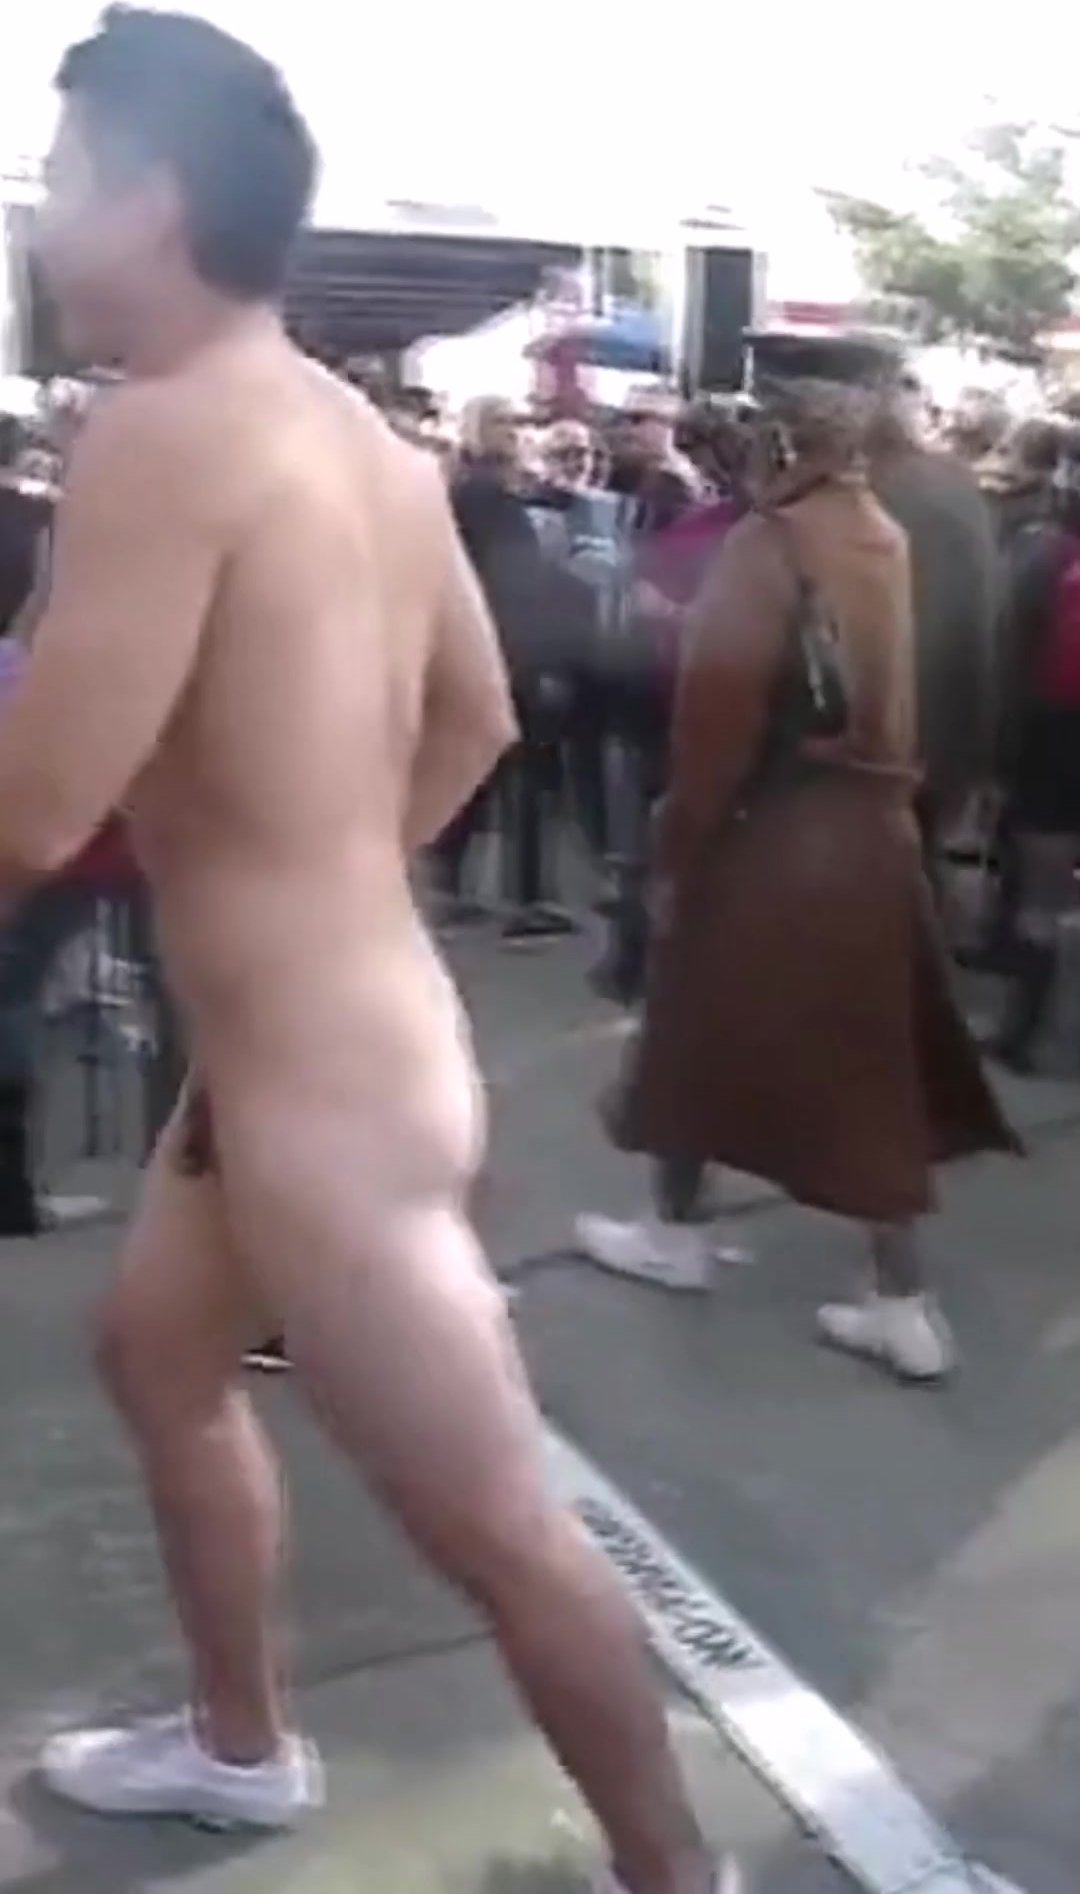 Male Naked Public